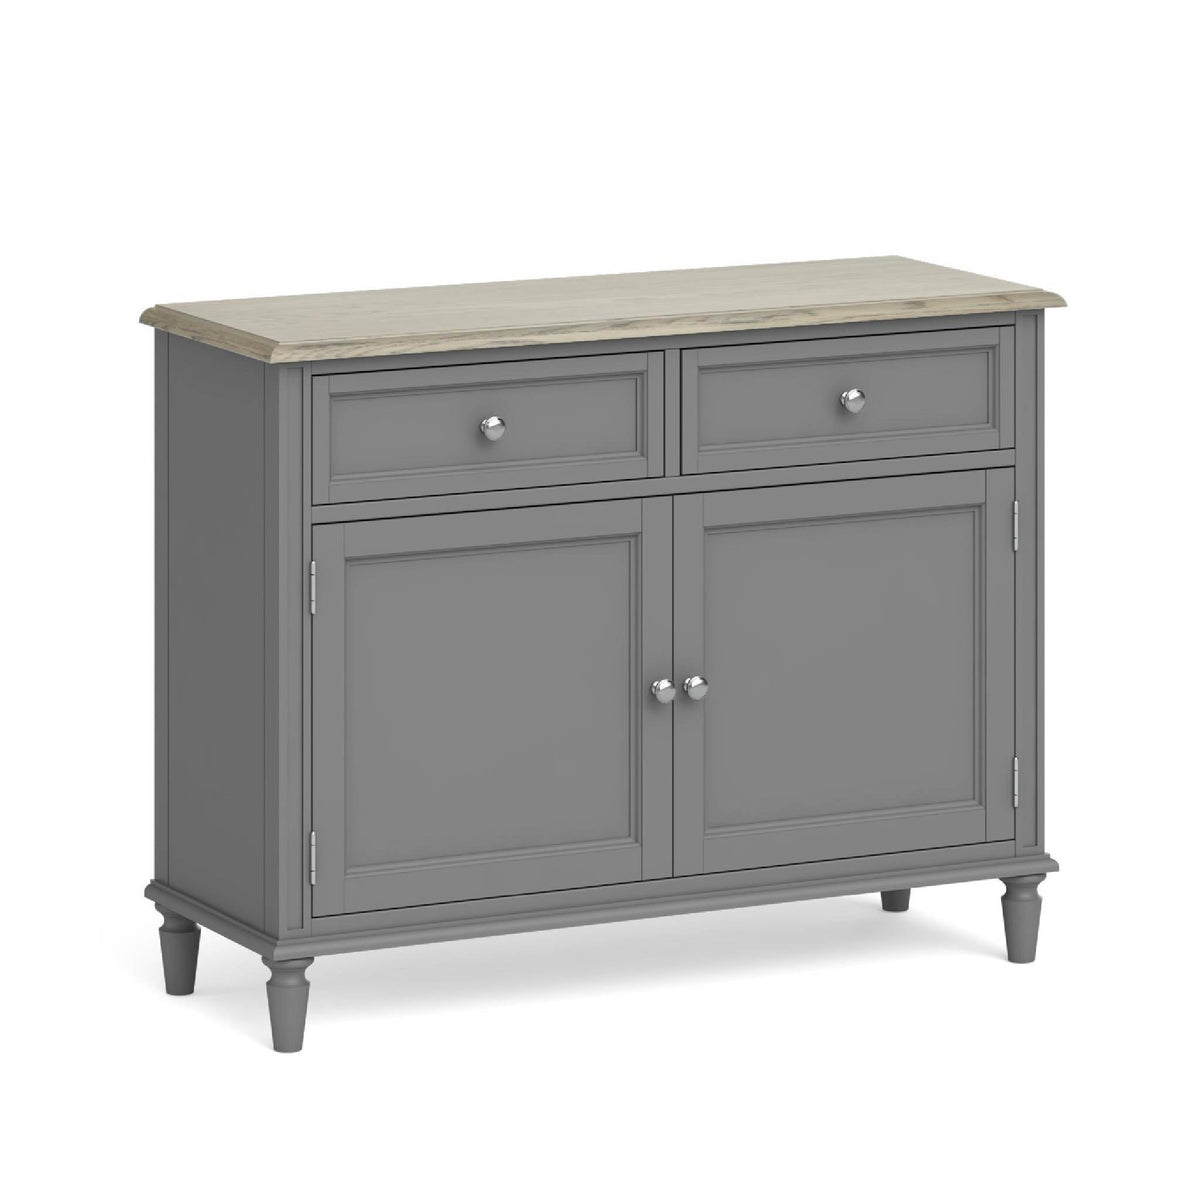 Mulsanne Grey Small Sideboard by Roseland Furniture